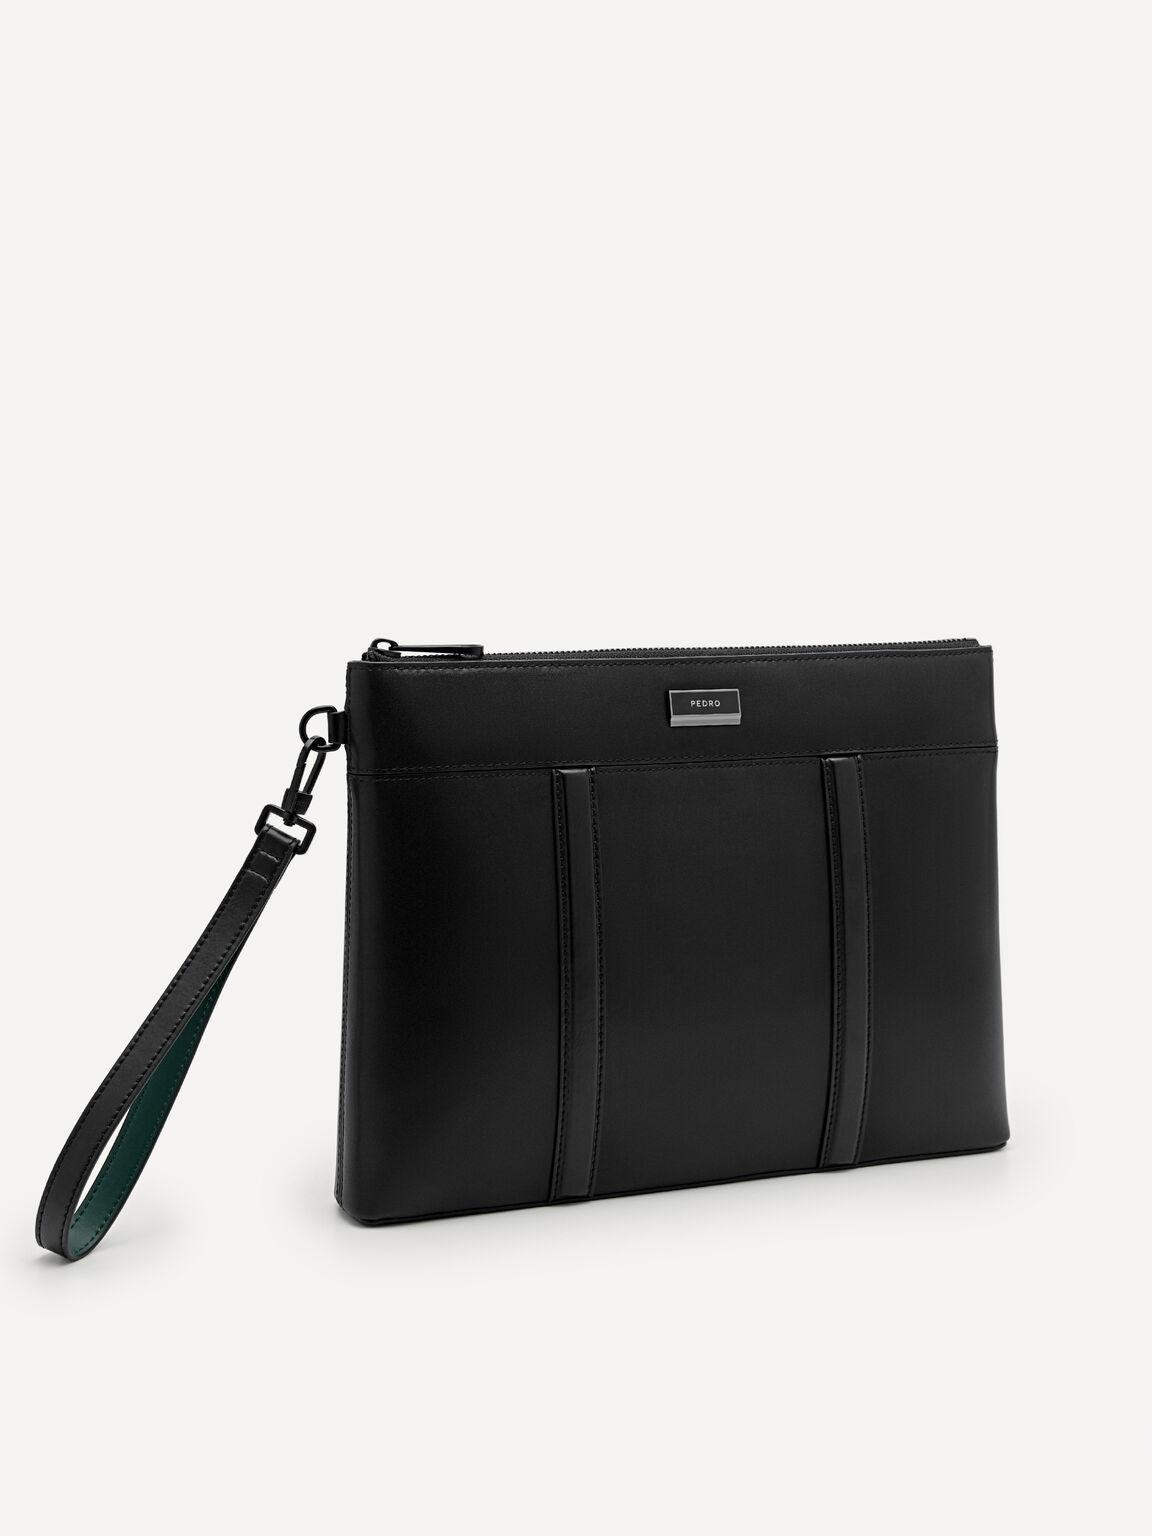 Allen Leather Portfolio Bag, Black, hi-res